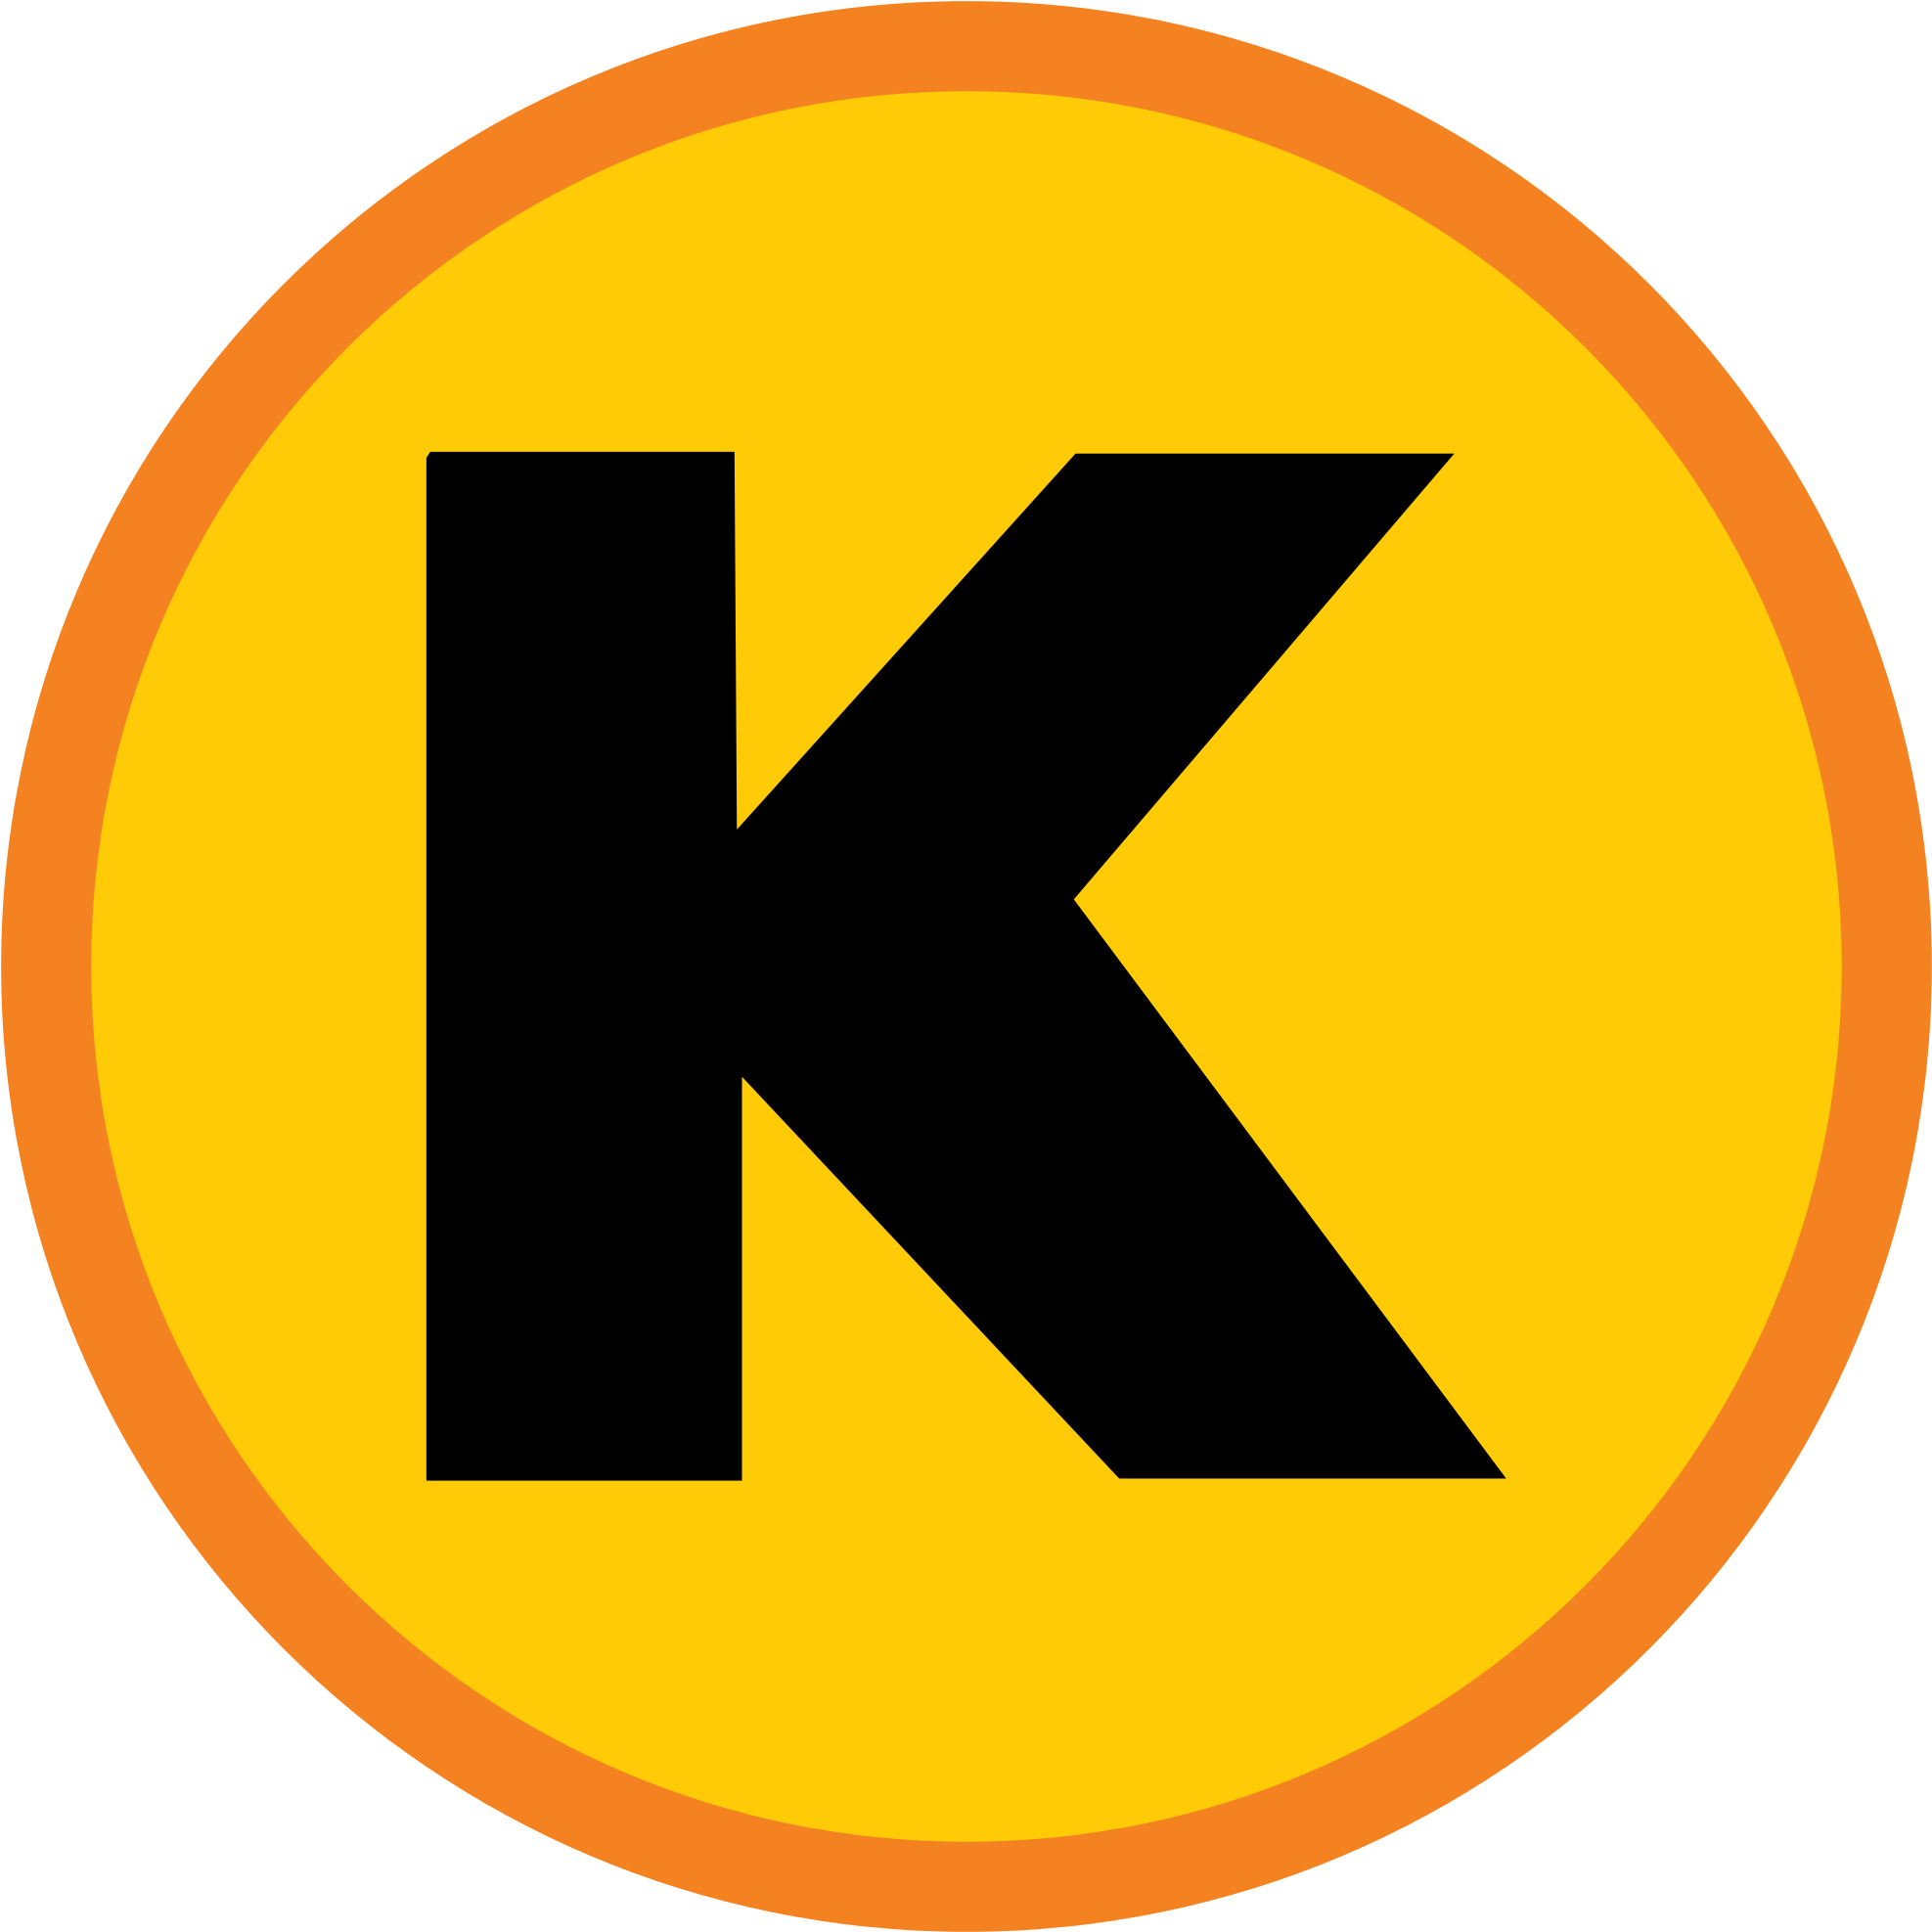 Ярлык буква с. Буква а логотип. Логотип с буквой k. Буква а в круге. Буква а желтая.